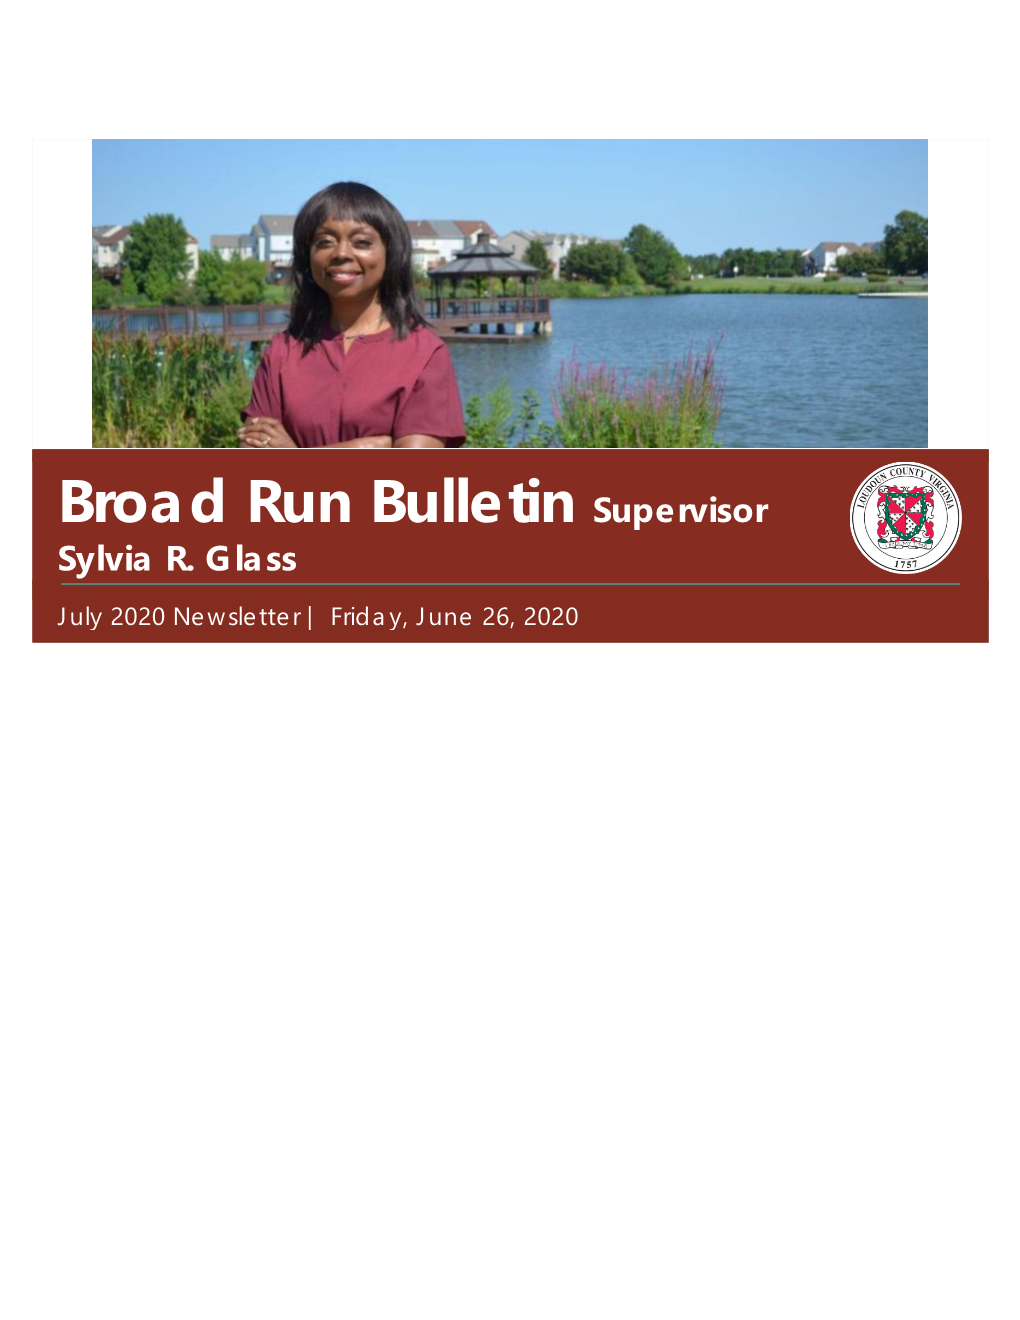 Broad Run Bulletin Supervisor